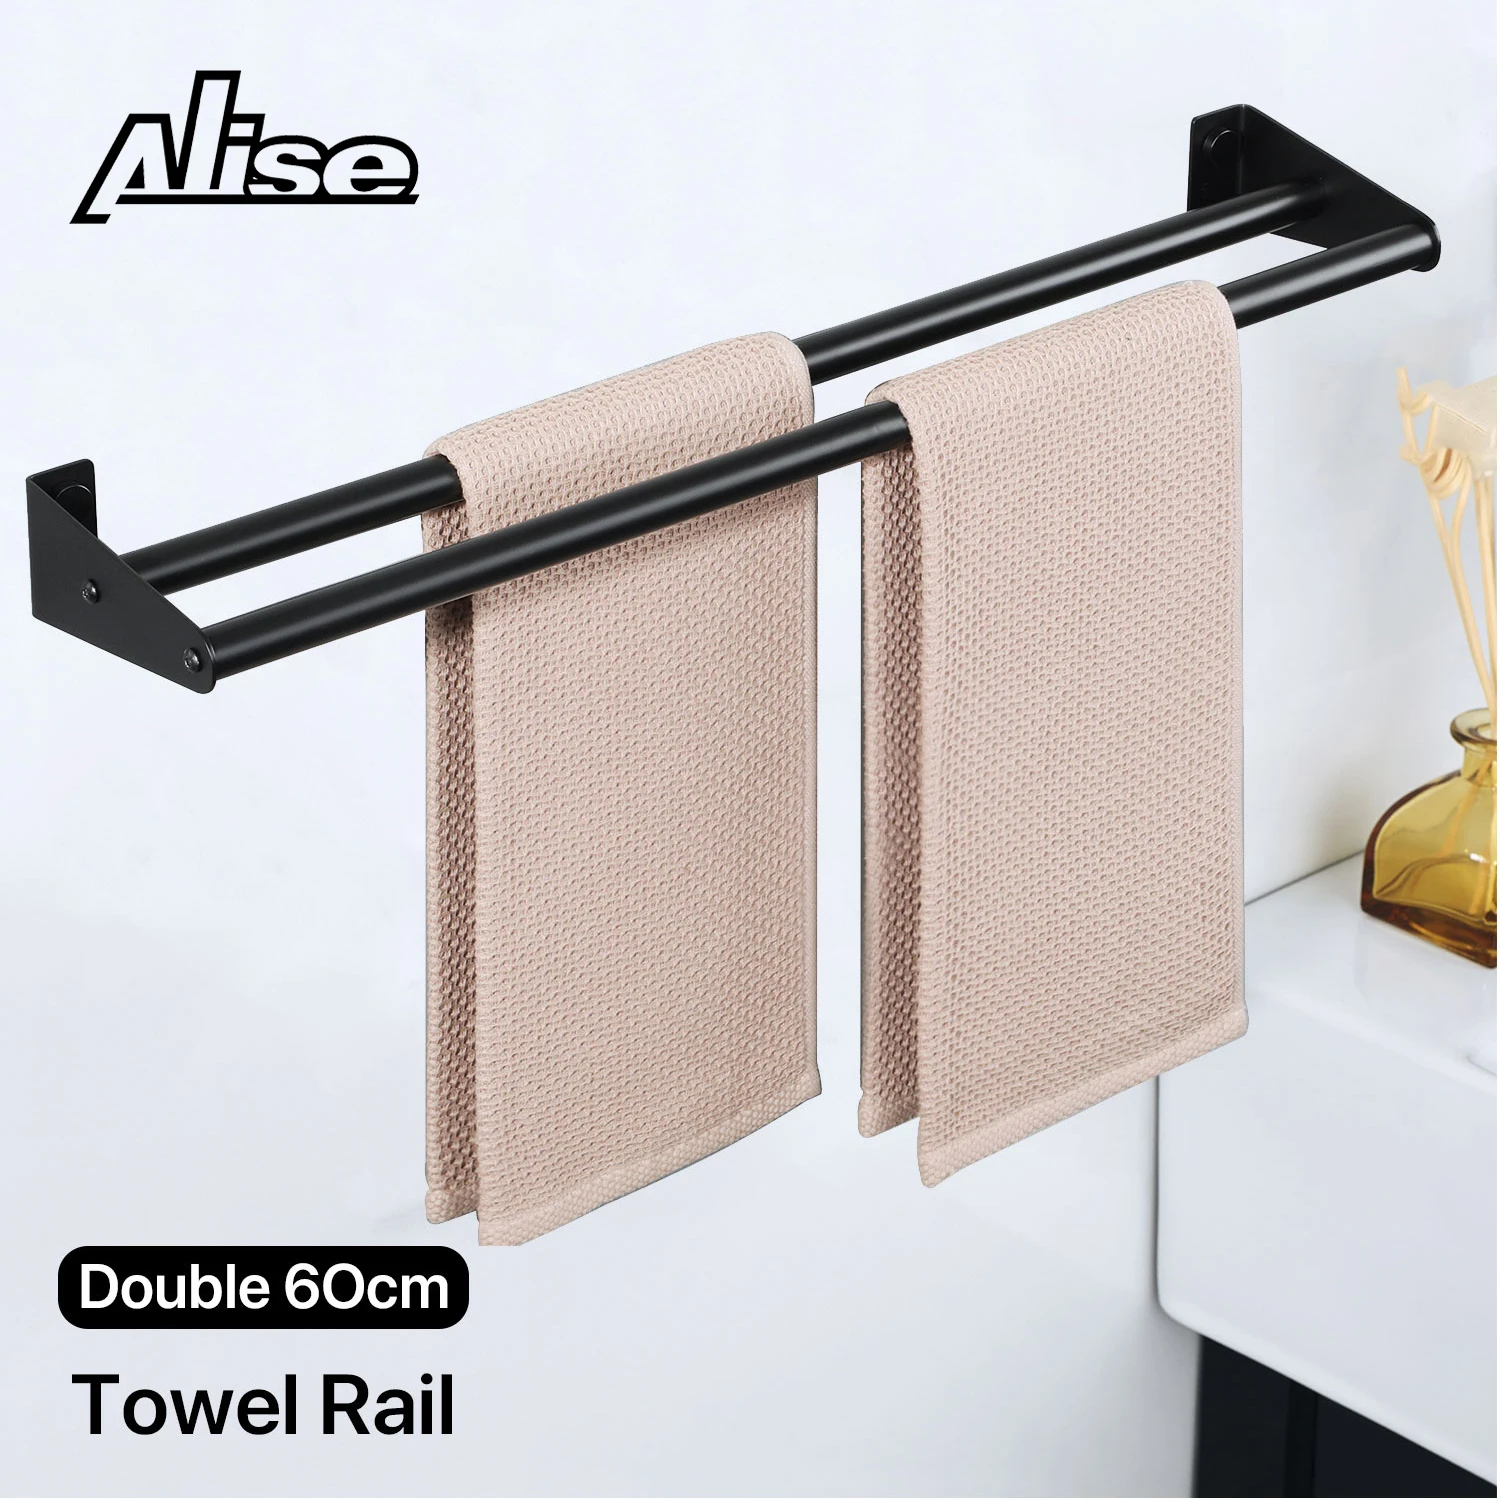 

60cm Towel Rail Bathroom Towel Holder 304 Stainless Steel Double Towel Bar Matte Black Wall Mounted Bathrooms Accessories